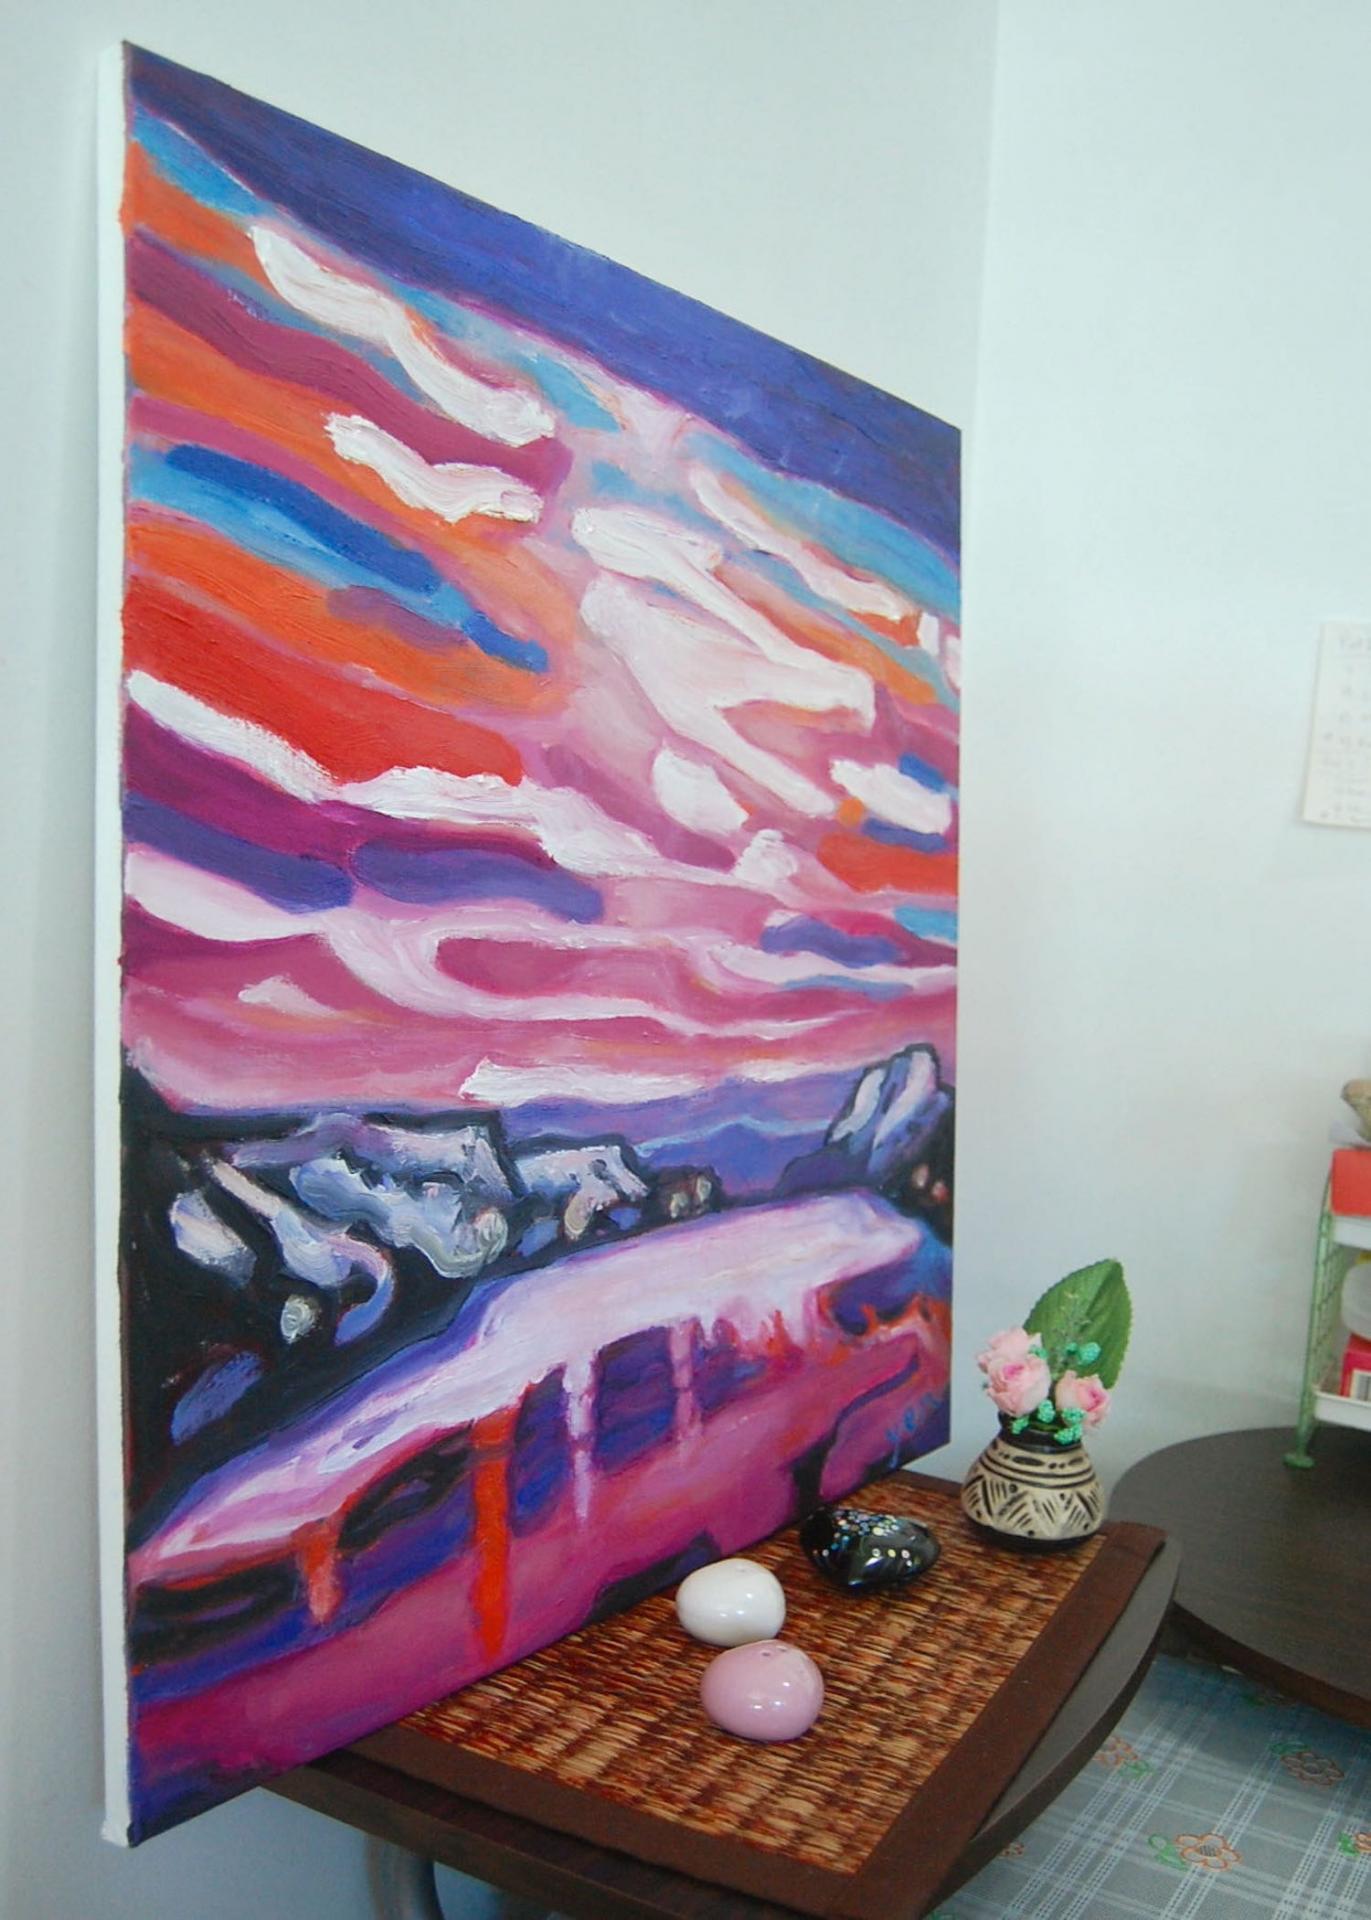 Akureyri -Iceland Winter Landscape Oil Painting, Van Gogh style, Snow Mountains, Sunset Sky, White Lake, Purple, Pink, Beautiful Scenery Art